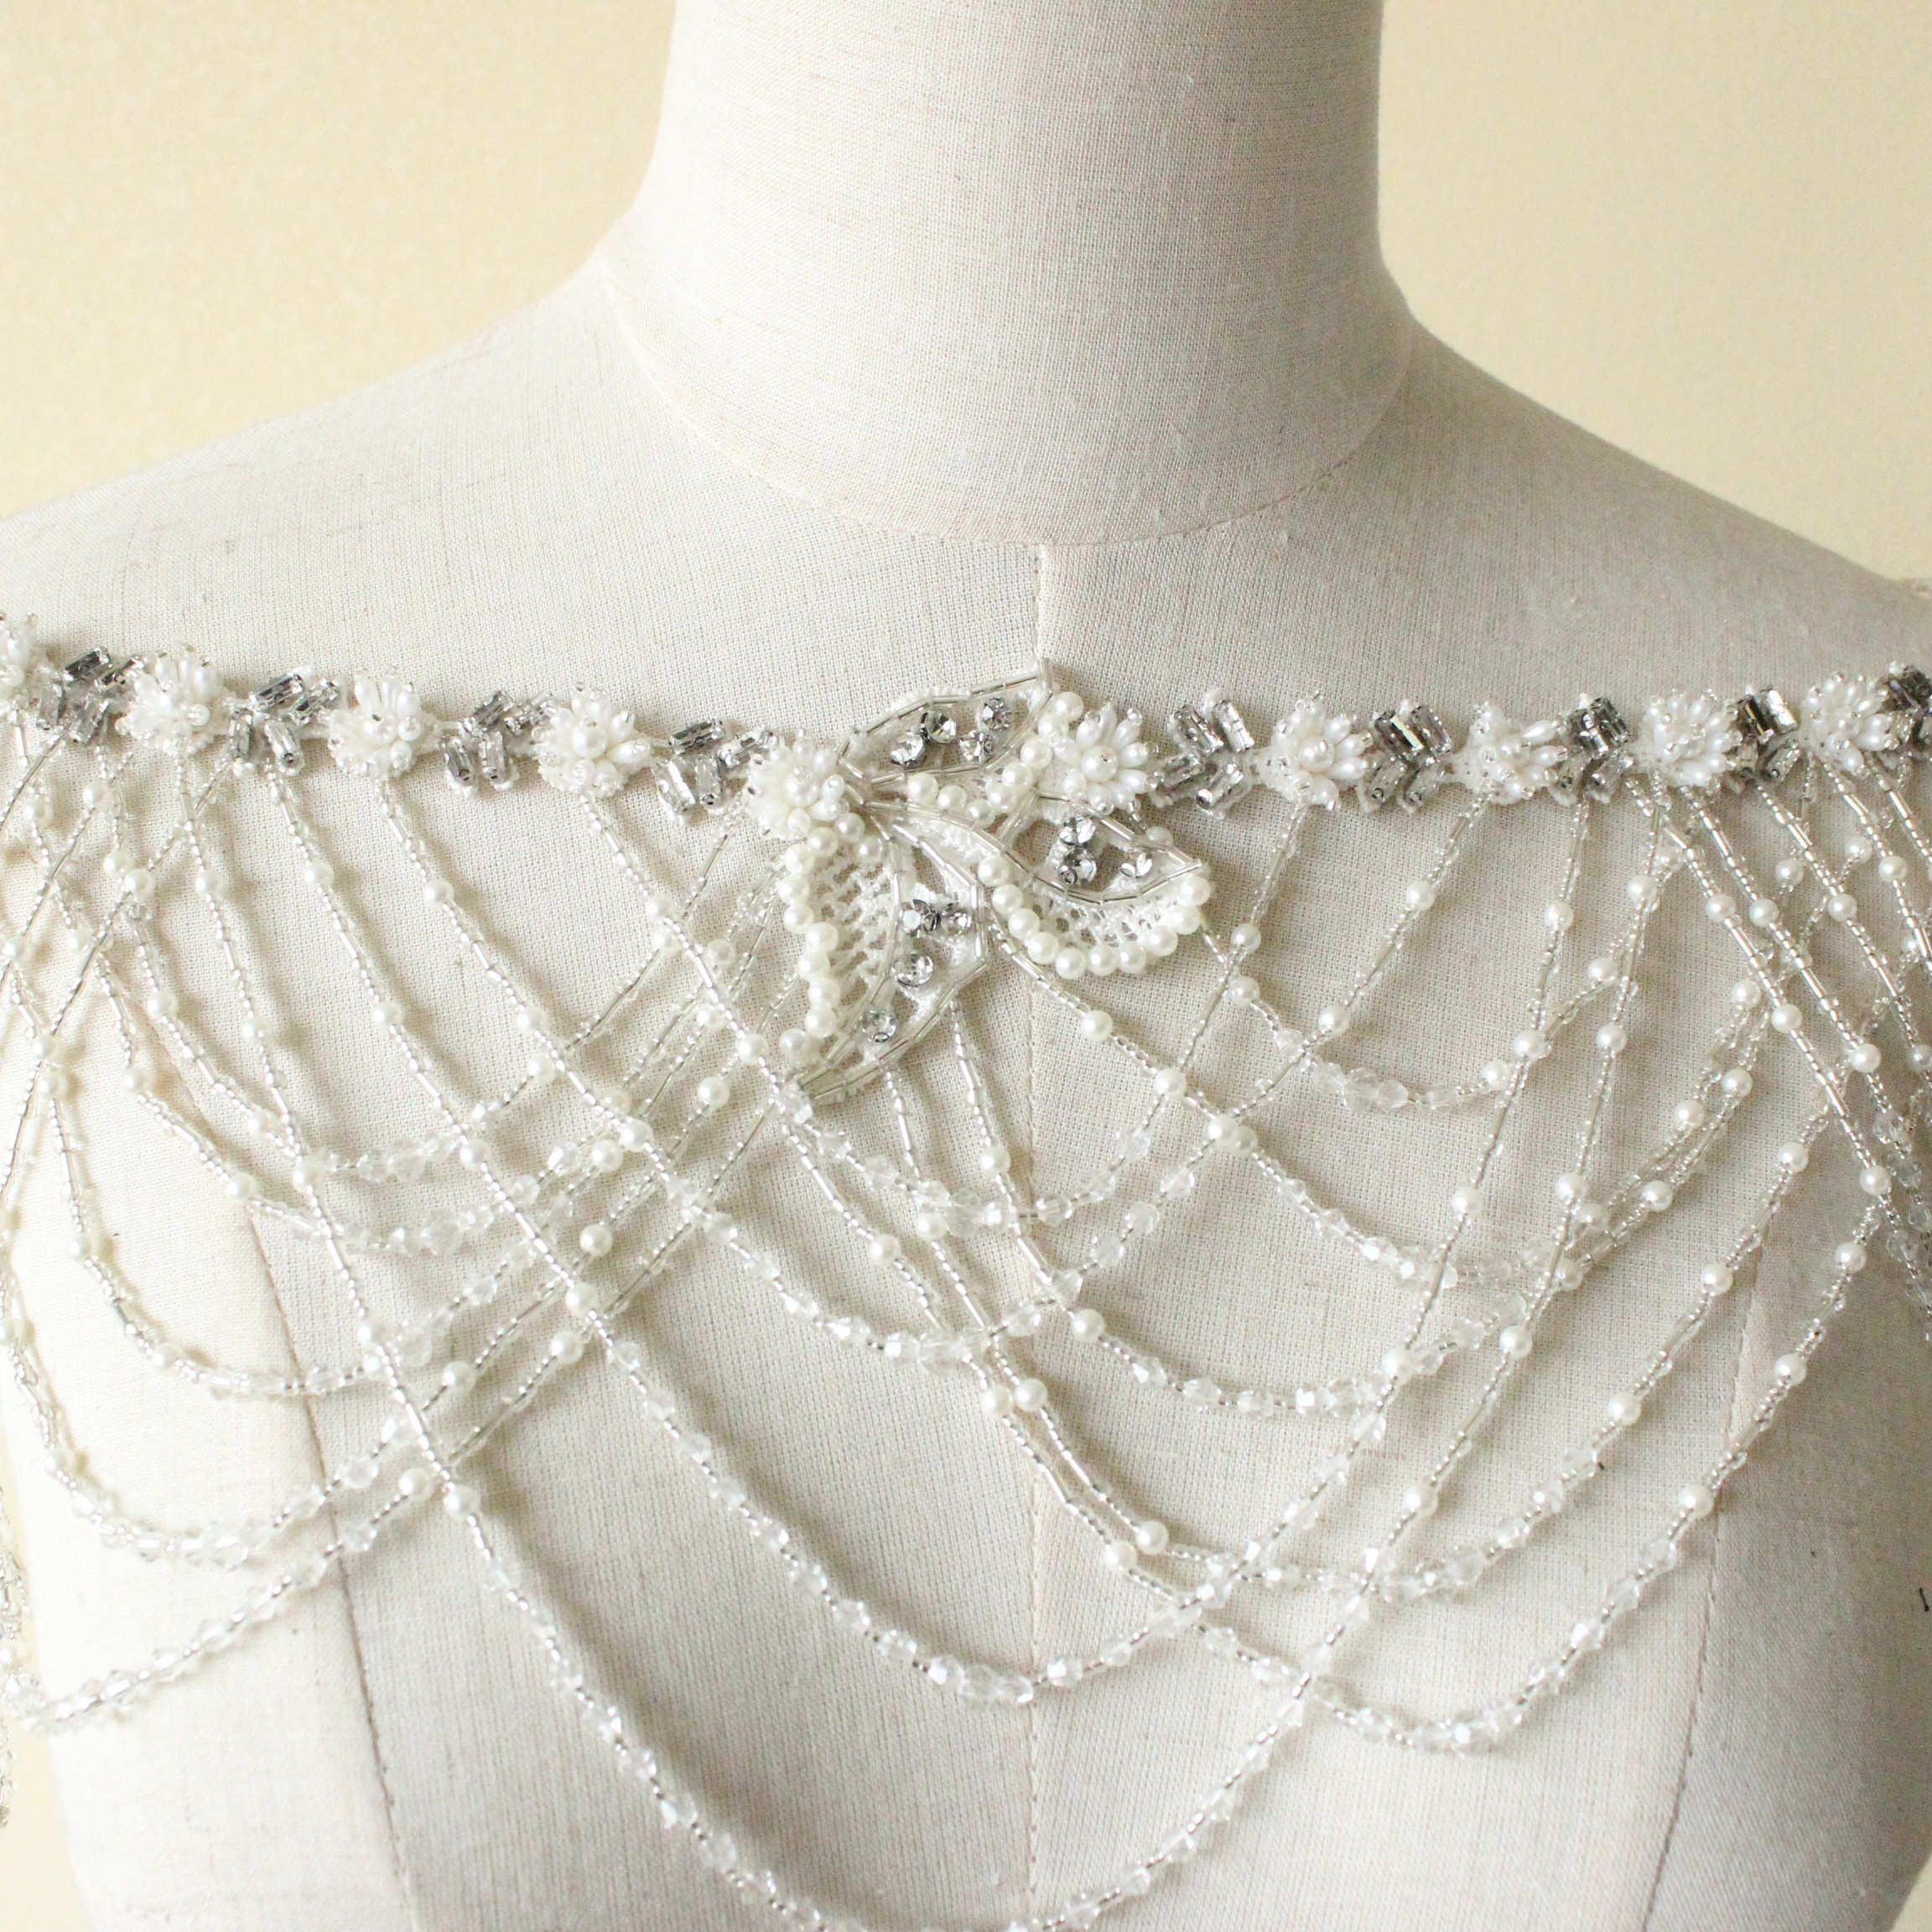 Bridal shoulder necklace Lace crystal bolero Cover up Cap | Etsy